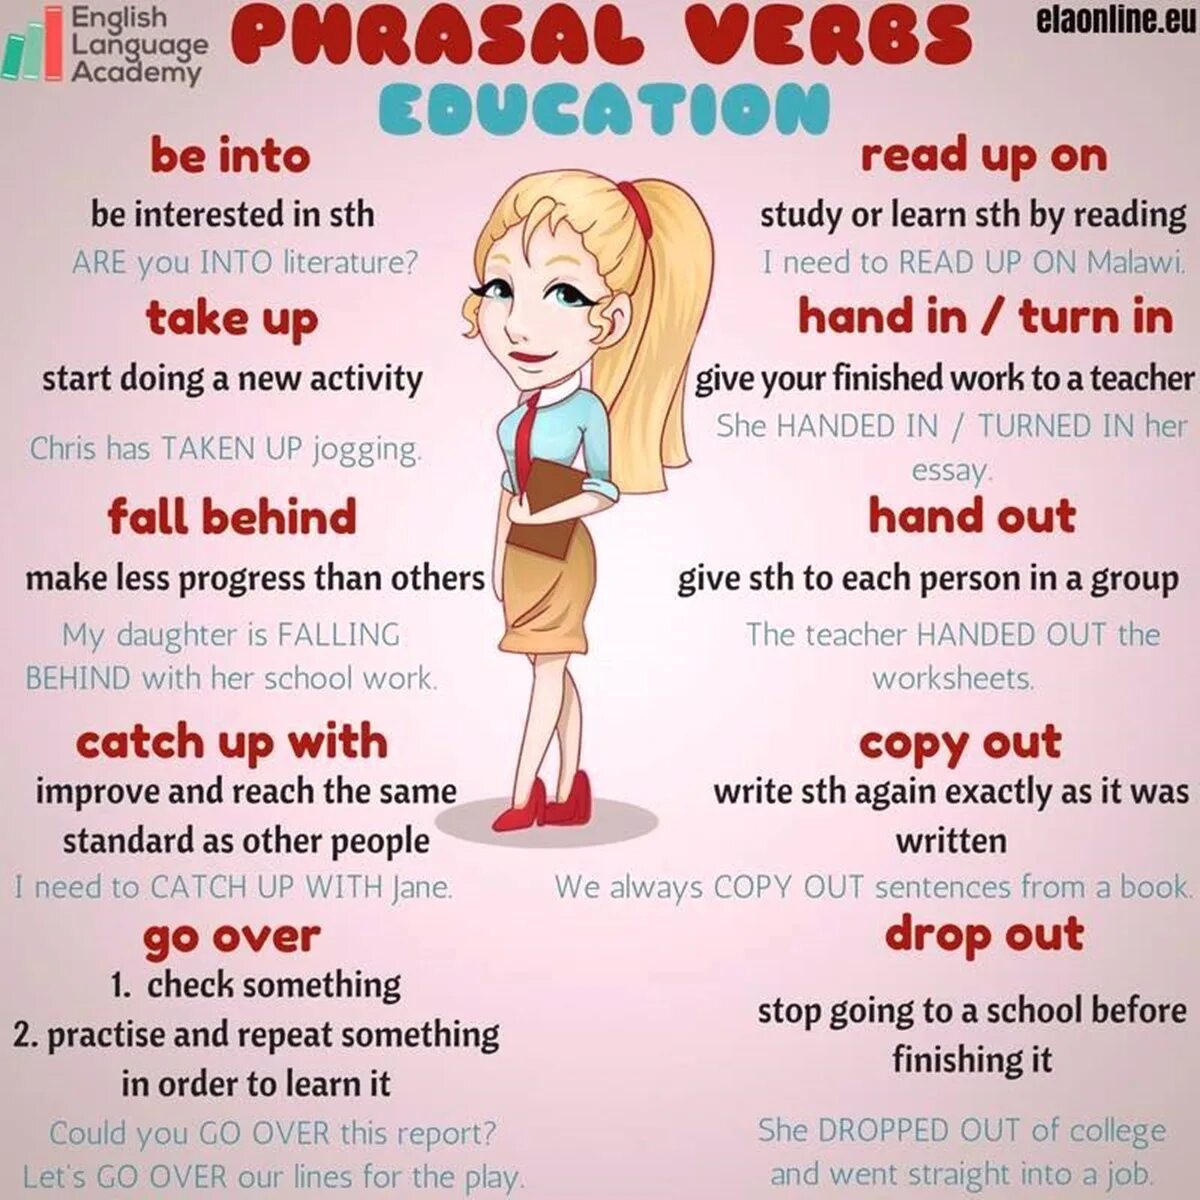 Do a turn out. Фразовые глаголы. Phrasal verbs в английском. Английские фразовые глаголы. Фразовые глаголы английского языка по темам.